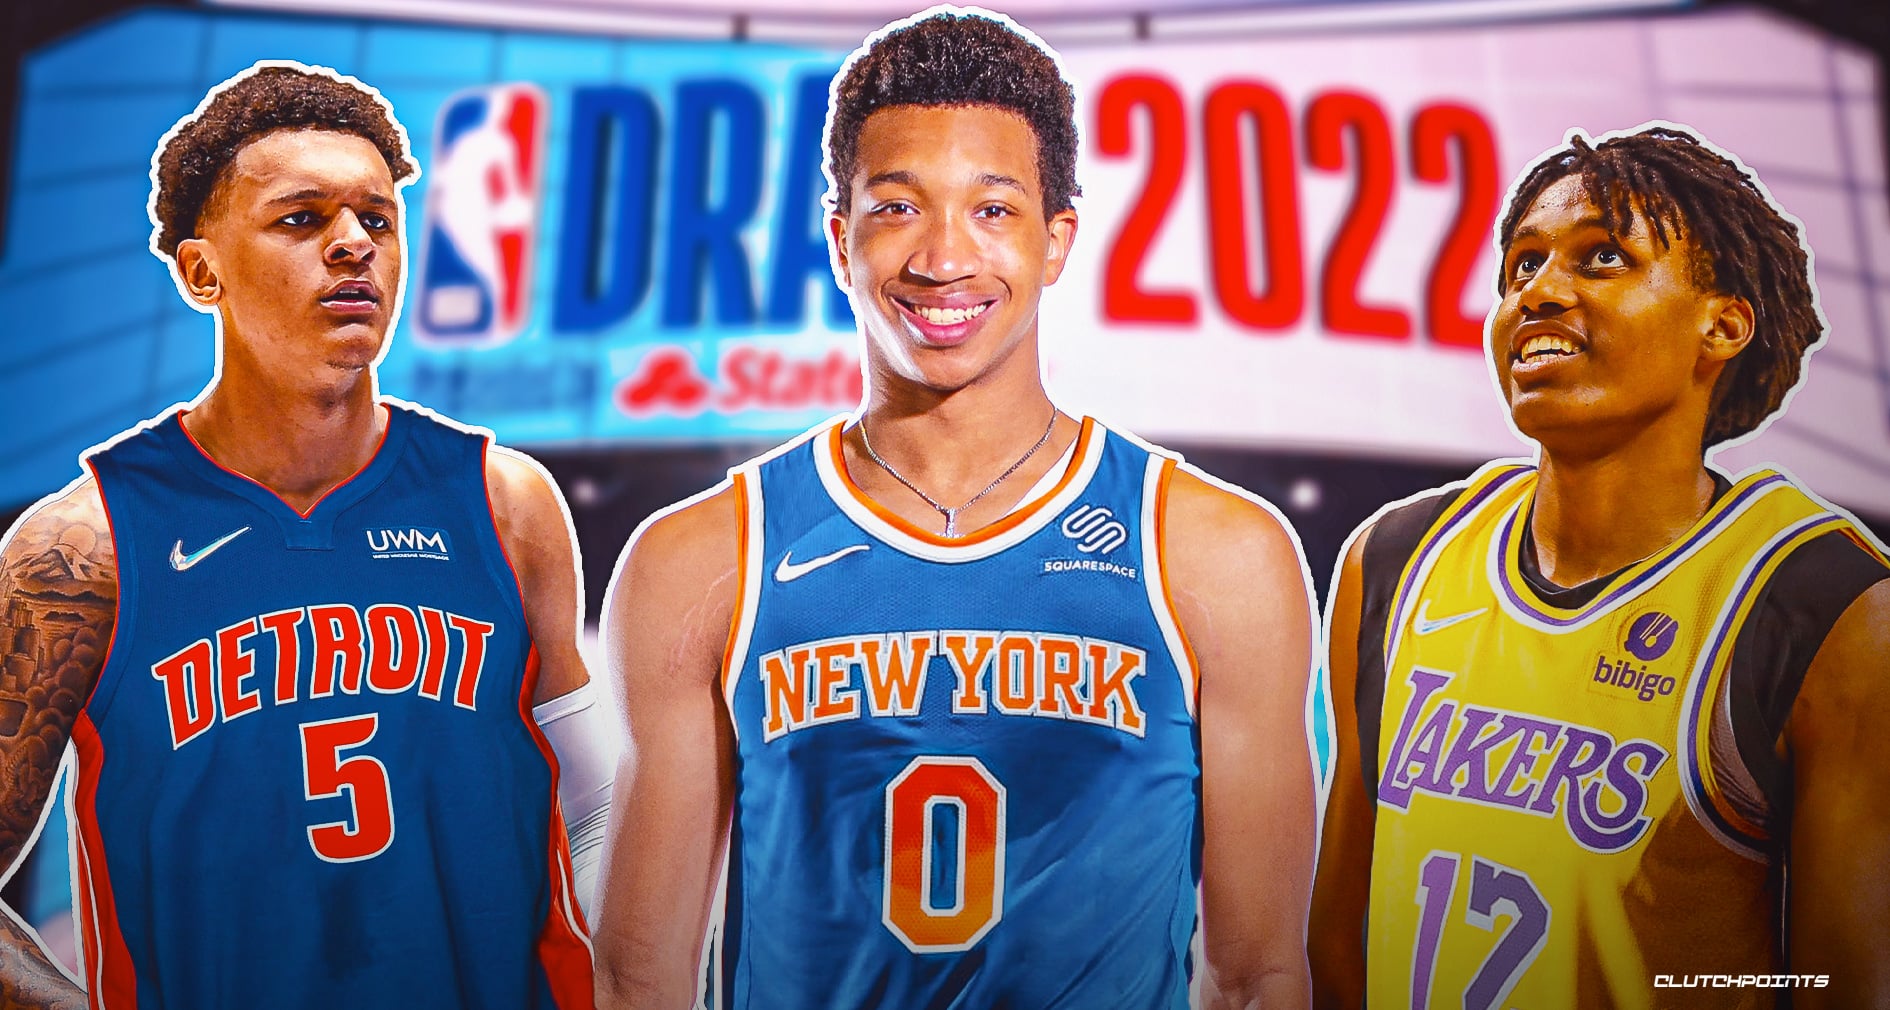 Draft NBA